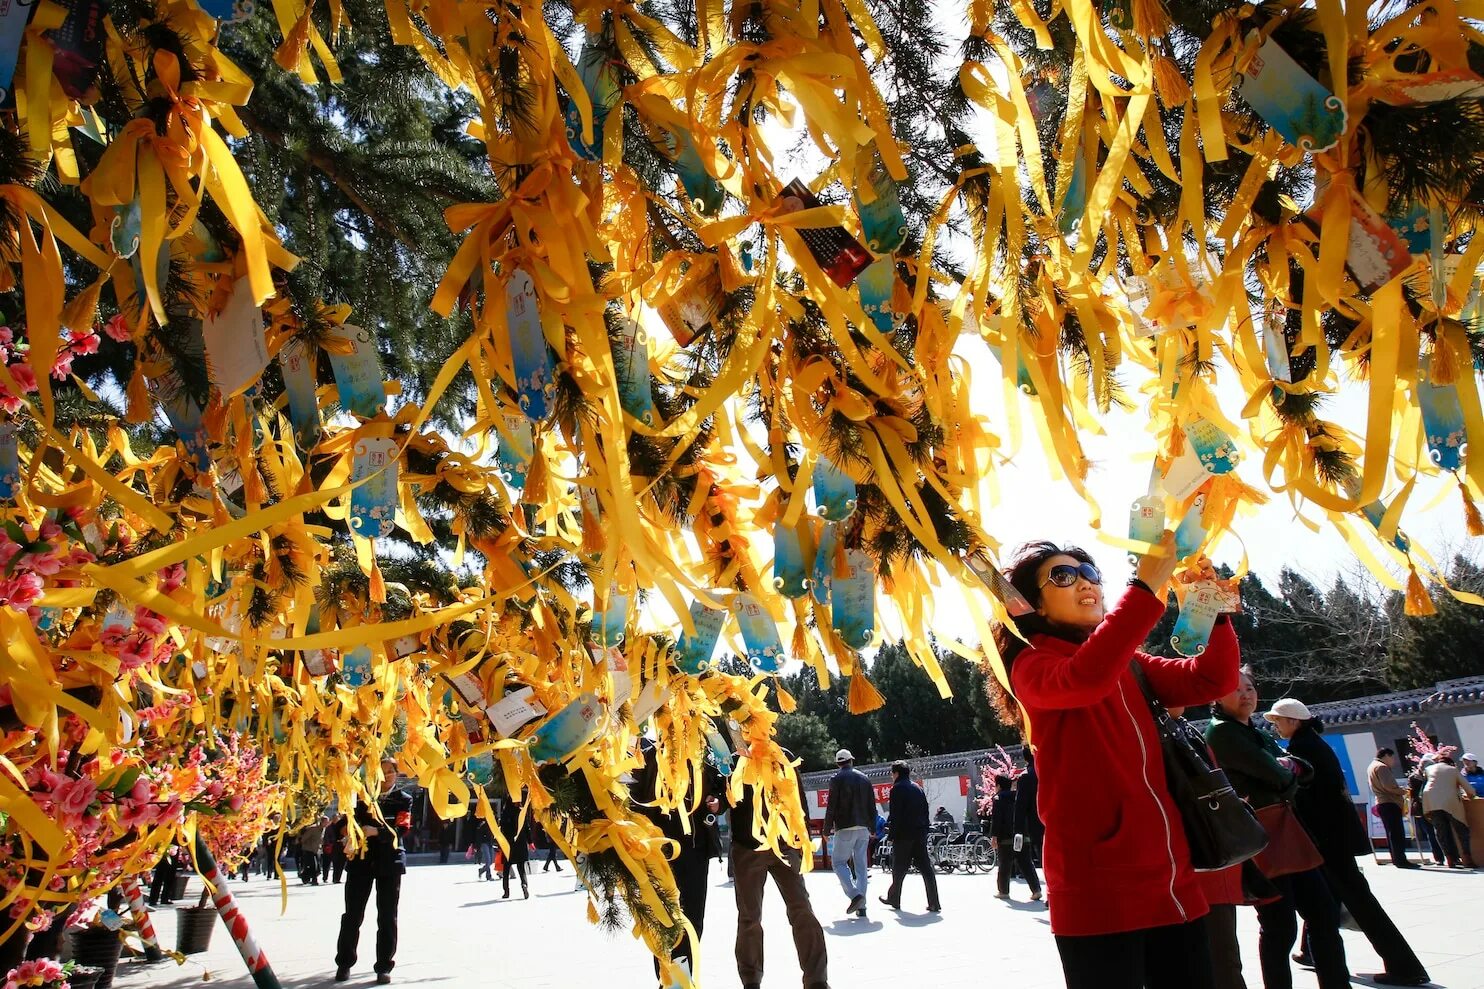 Фестиваль Цинмин в Китае. Праздник чистого света "Цинмин" - Китай. Qing Ming Jie китайский праздник. Фестиваль Цинмин (Qingming Festival).